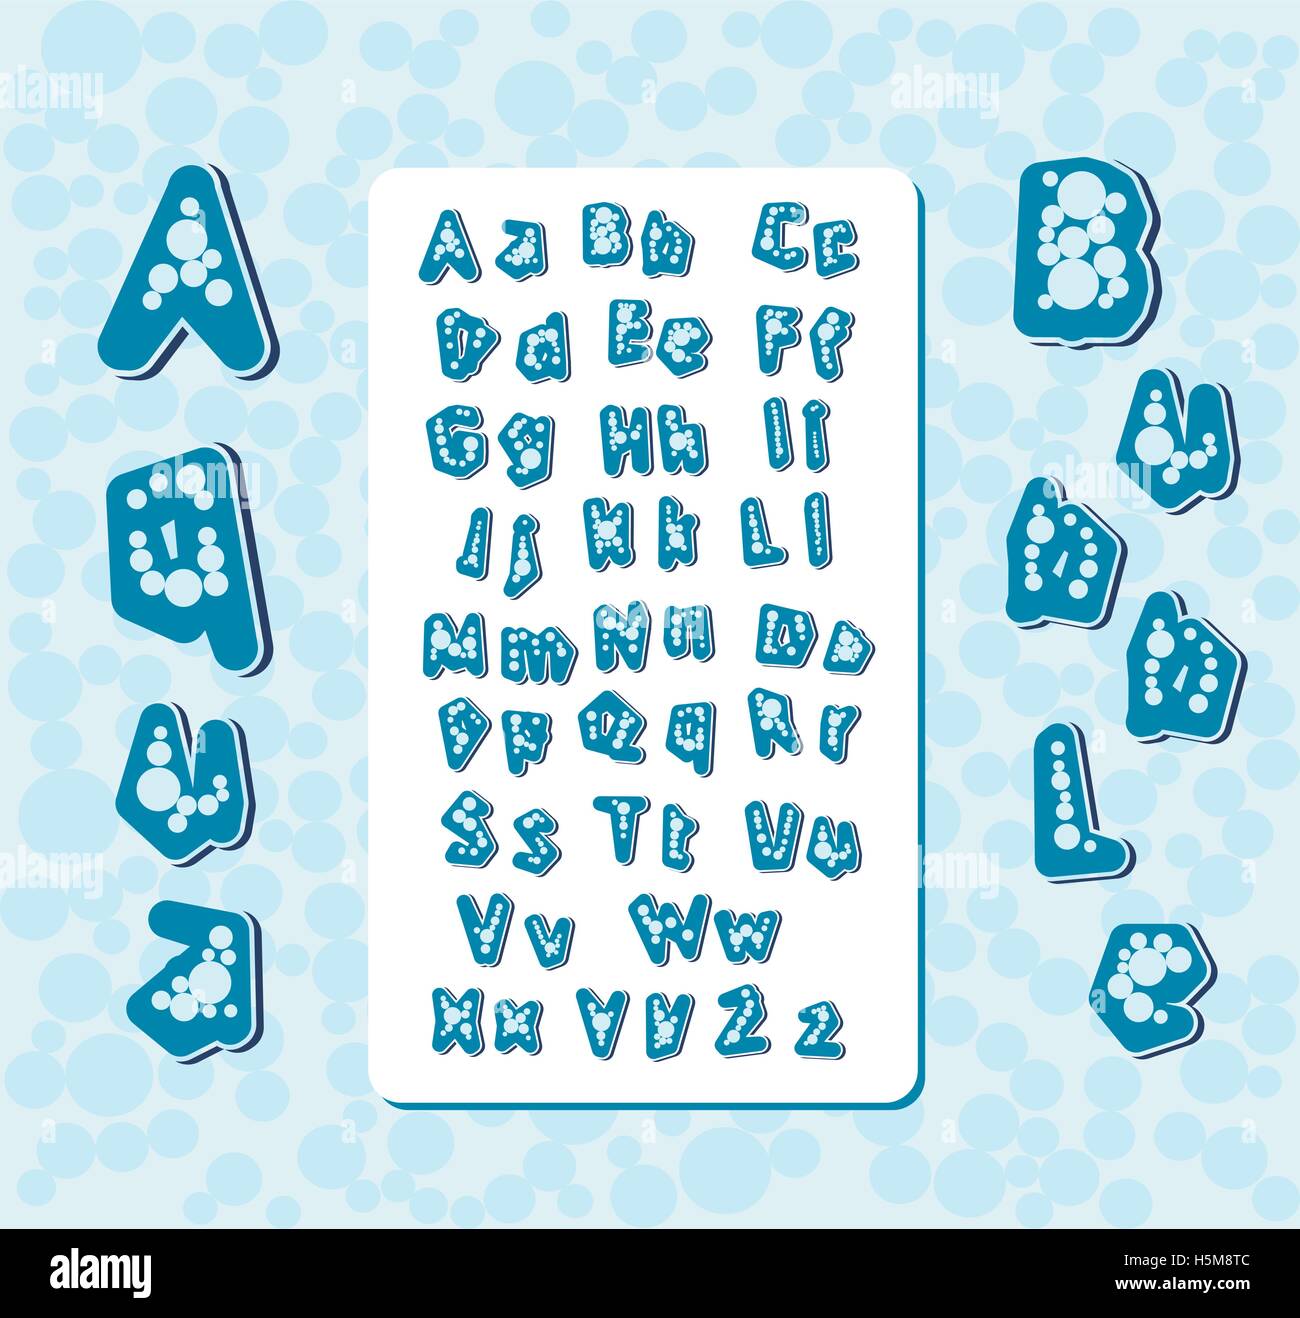 aqua bubble stylized handwritten letters english alphabet characters vector illustration Stock Vector